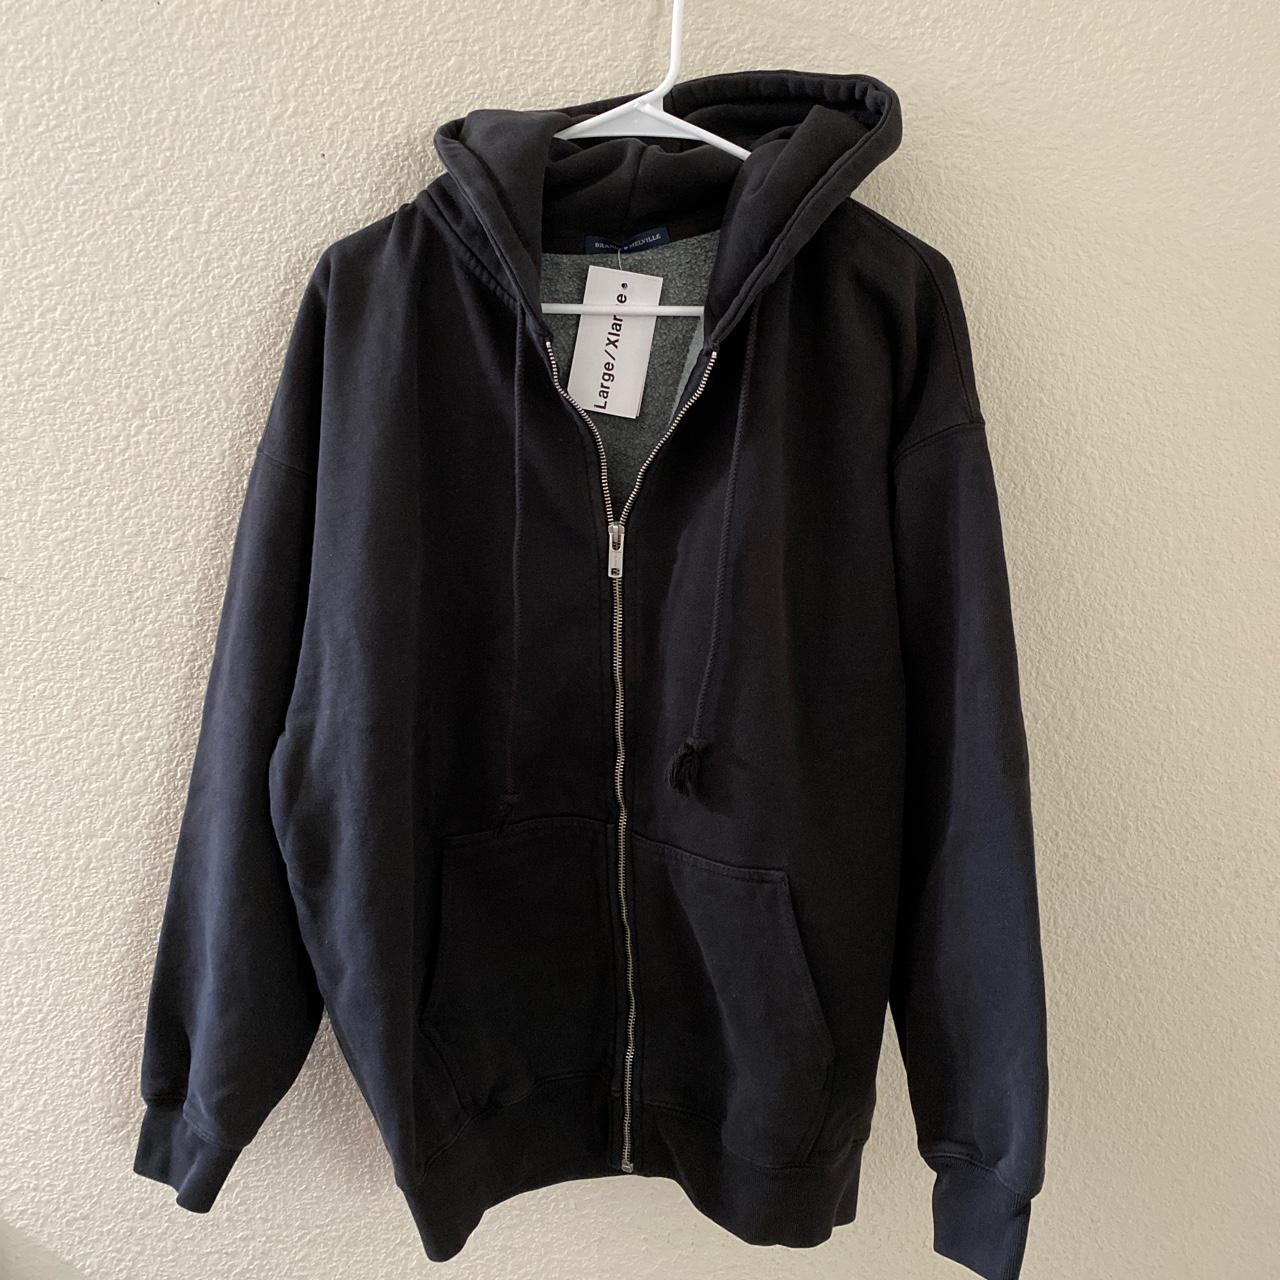 Brandy Melville faded black oversized Christy hoodie - Depop